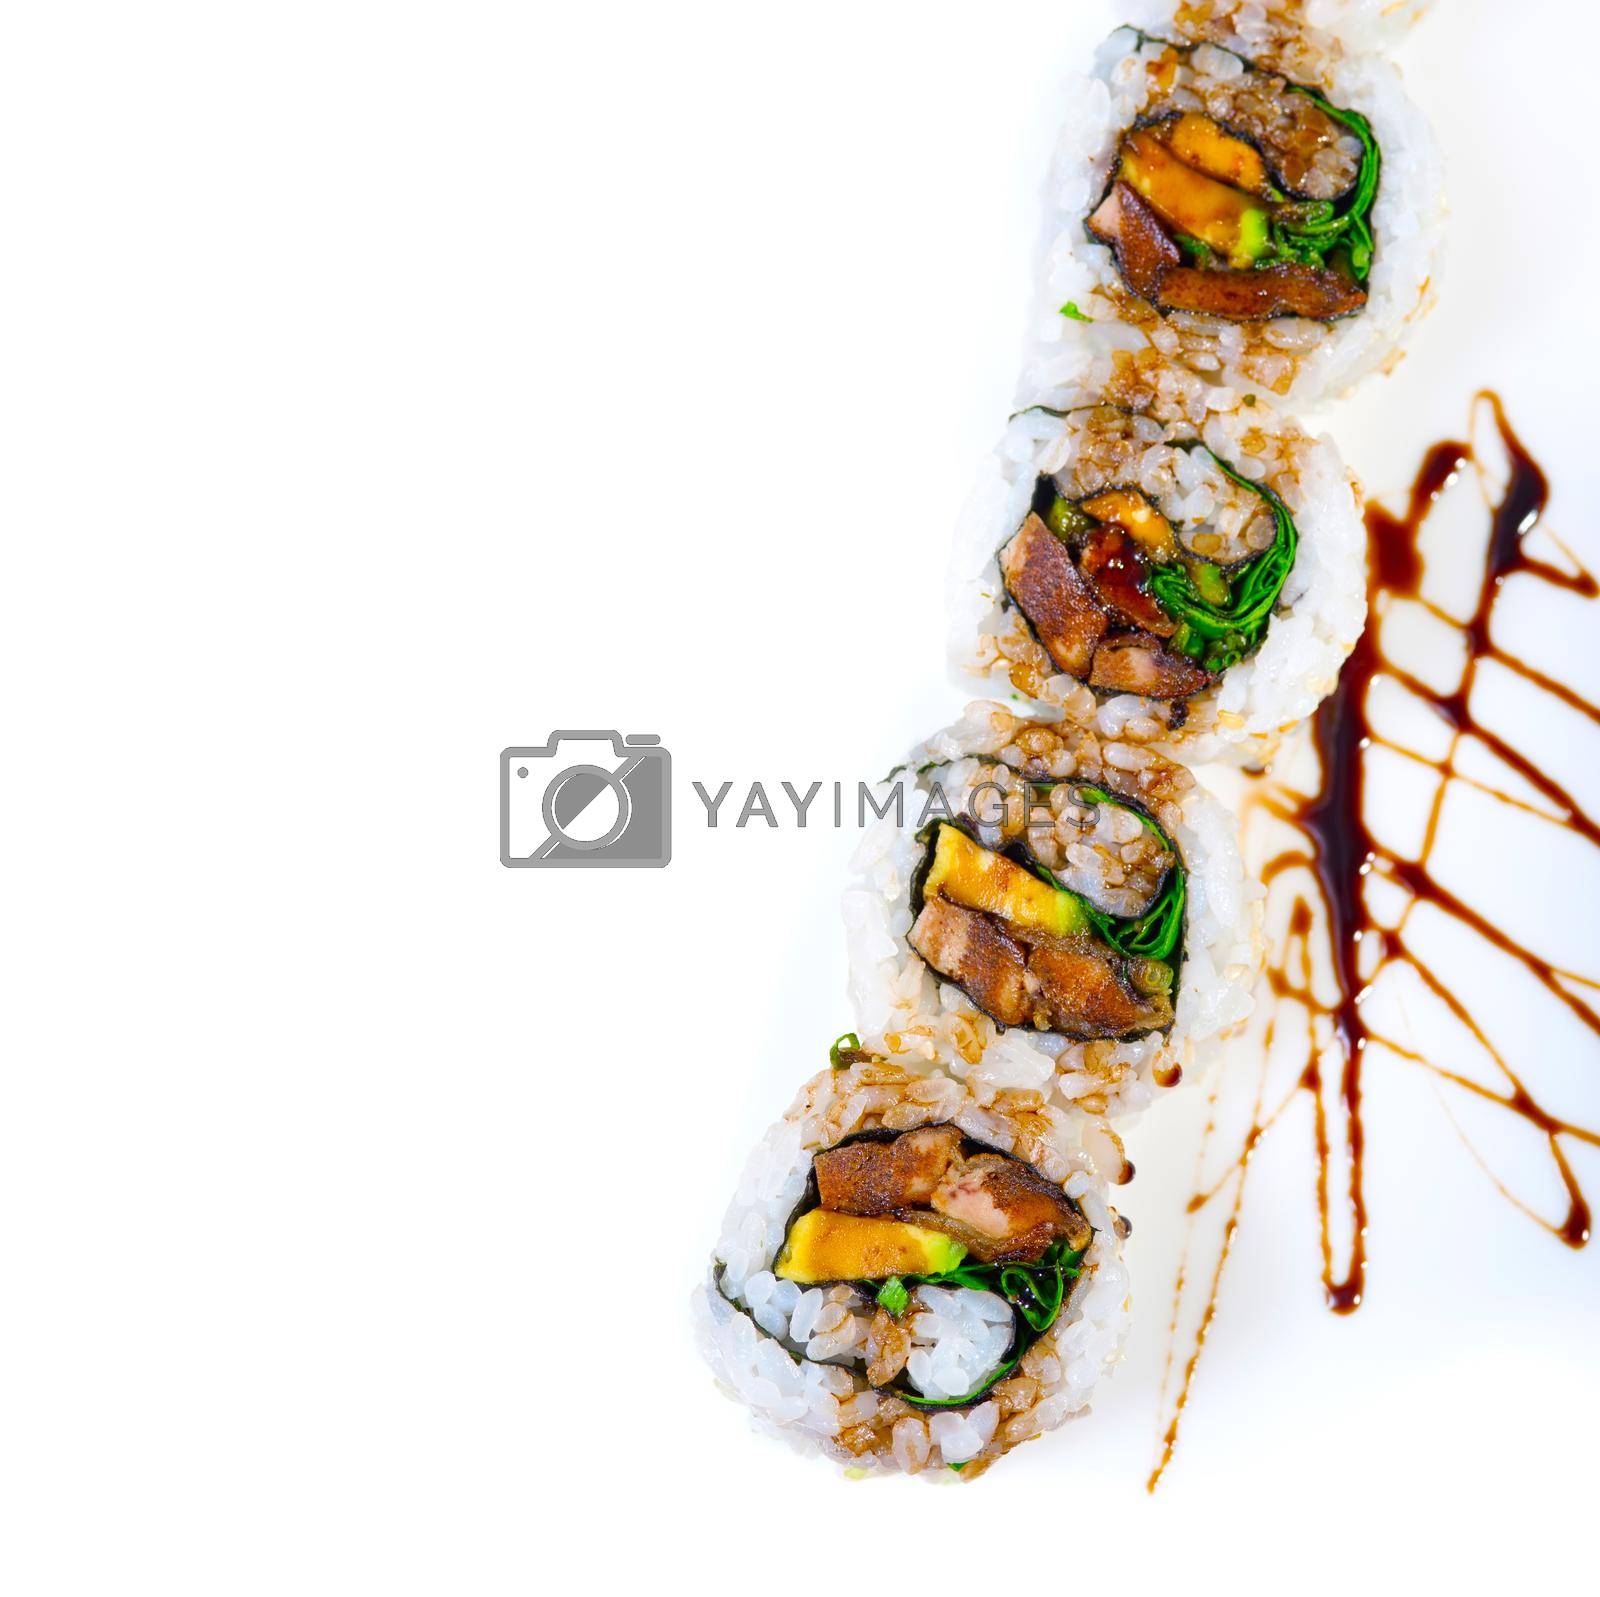 Royalty free image of fresh sushi choice combination assortment selection  by keko64